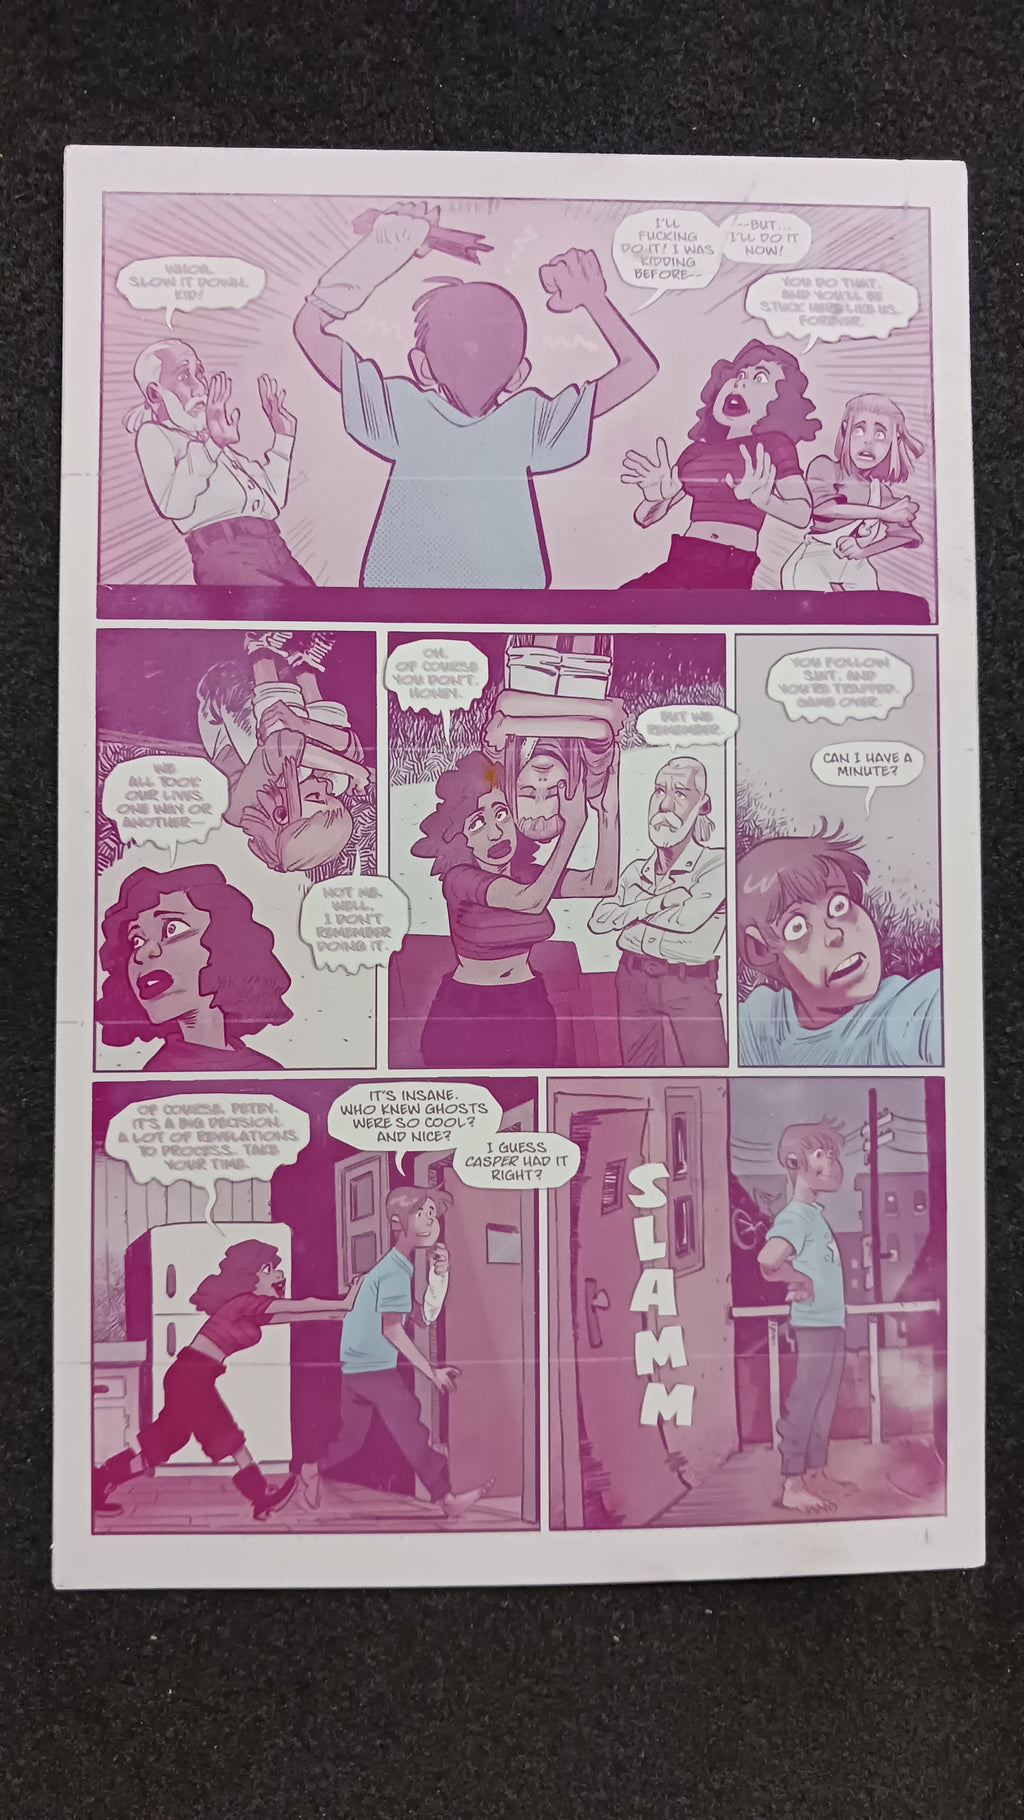 Deadfellows #1 - Page 26 - PRESSWORKS - Comic Art - Printer Plate - Magenta